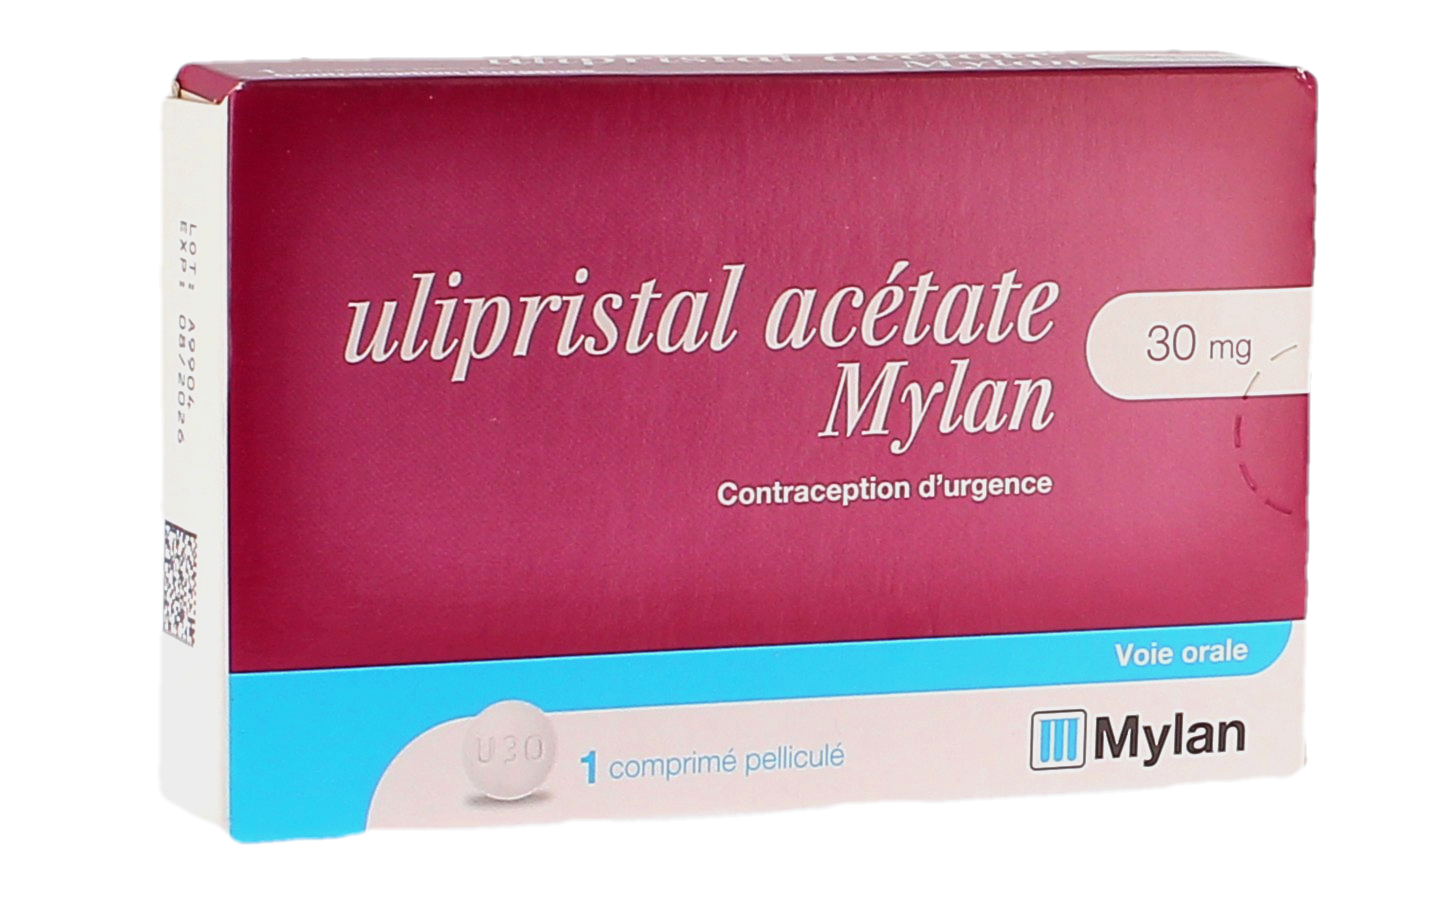 Ulipristal acétate 30 mg Mylan - contraception d'urgence